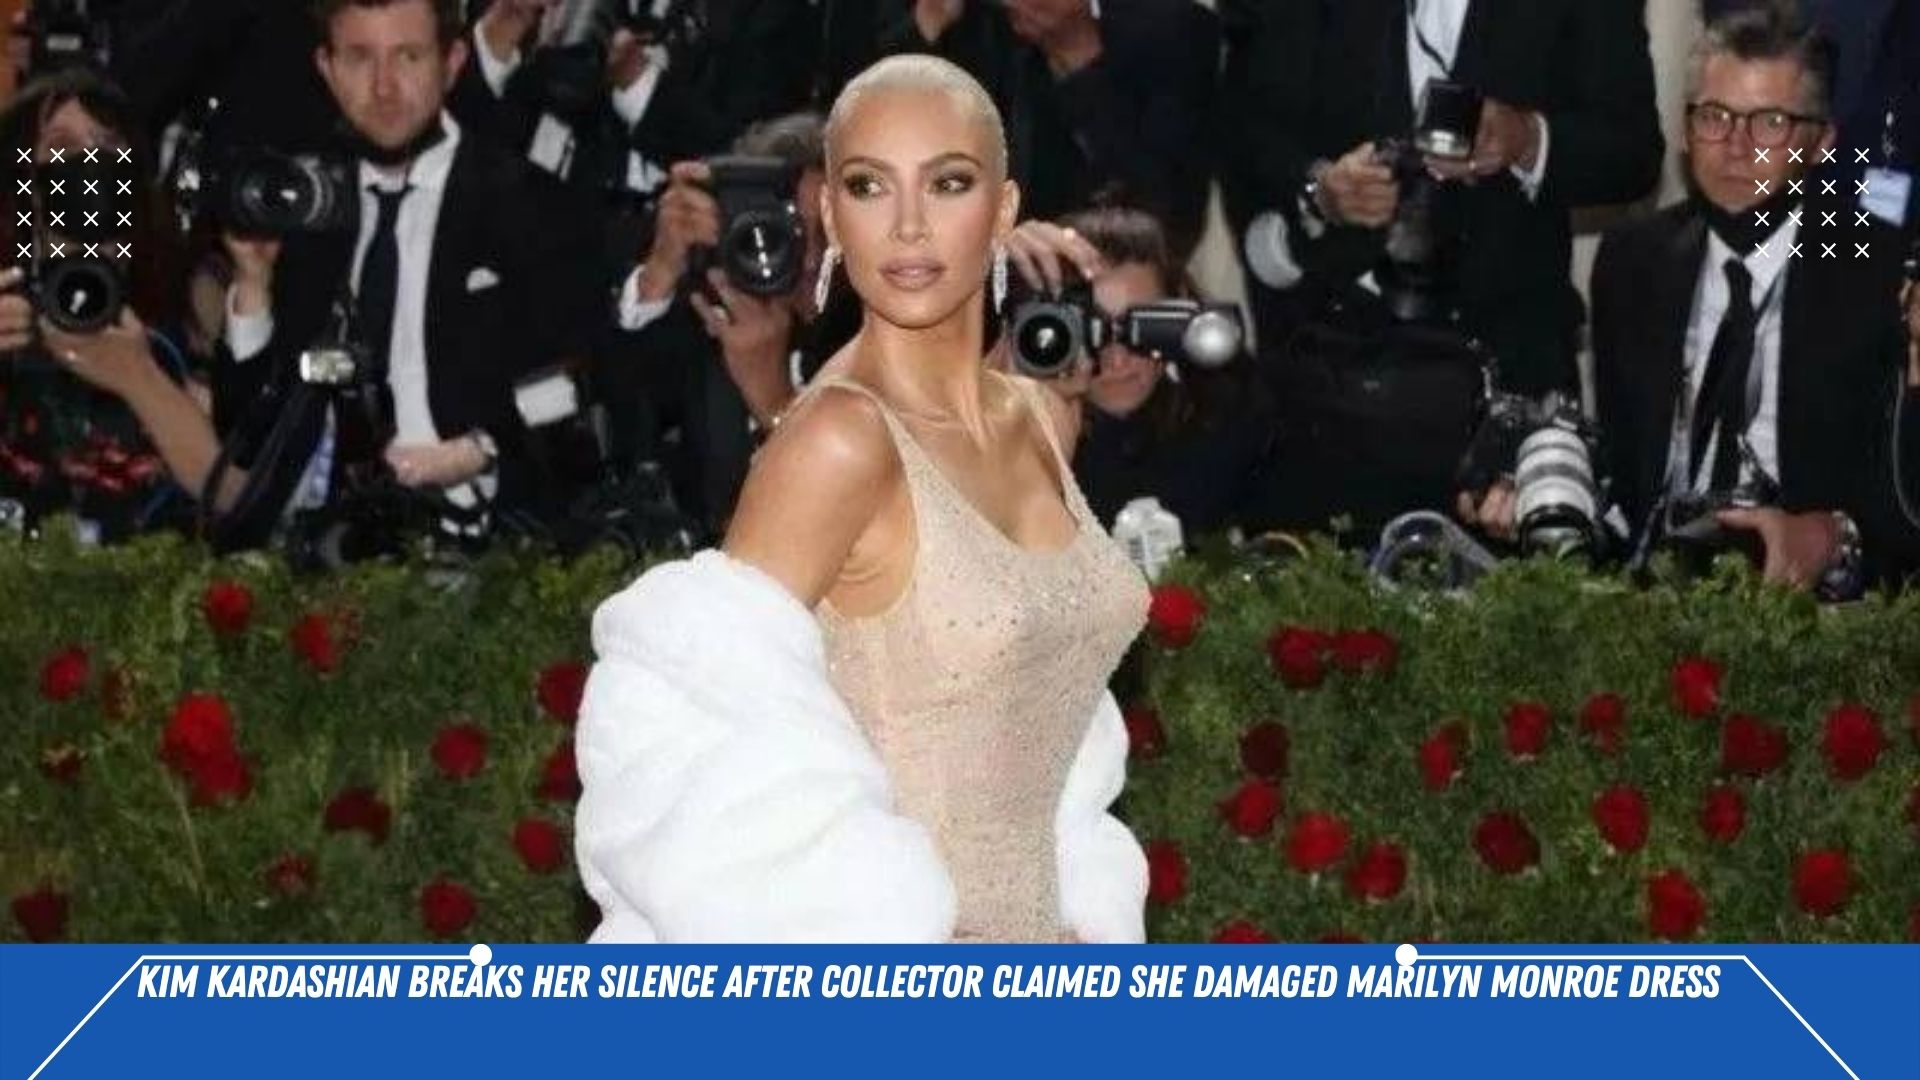 Kim Kardashian Breaks Her Silence After Collector Claimed She Damaged Marilyn Monroe Dress